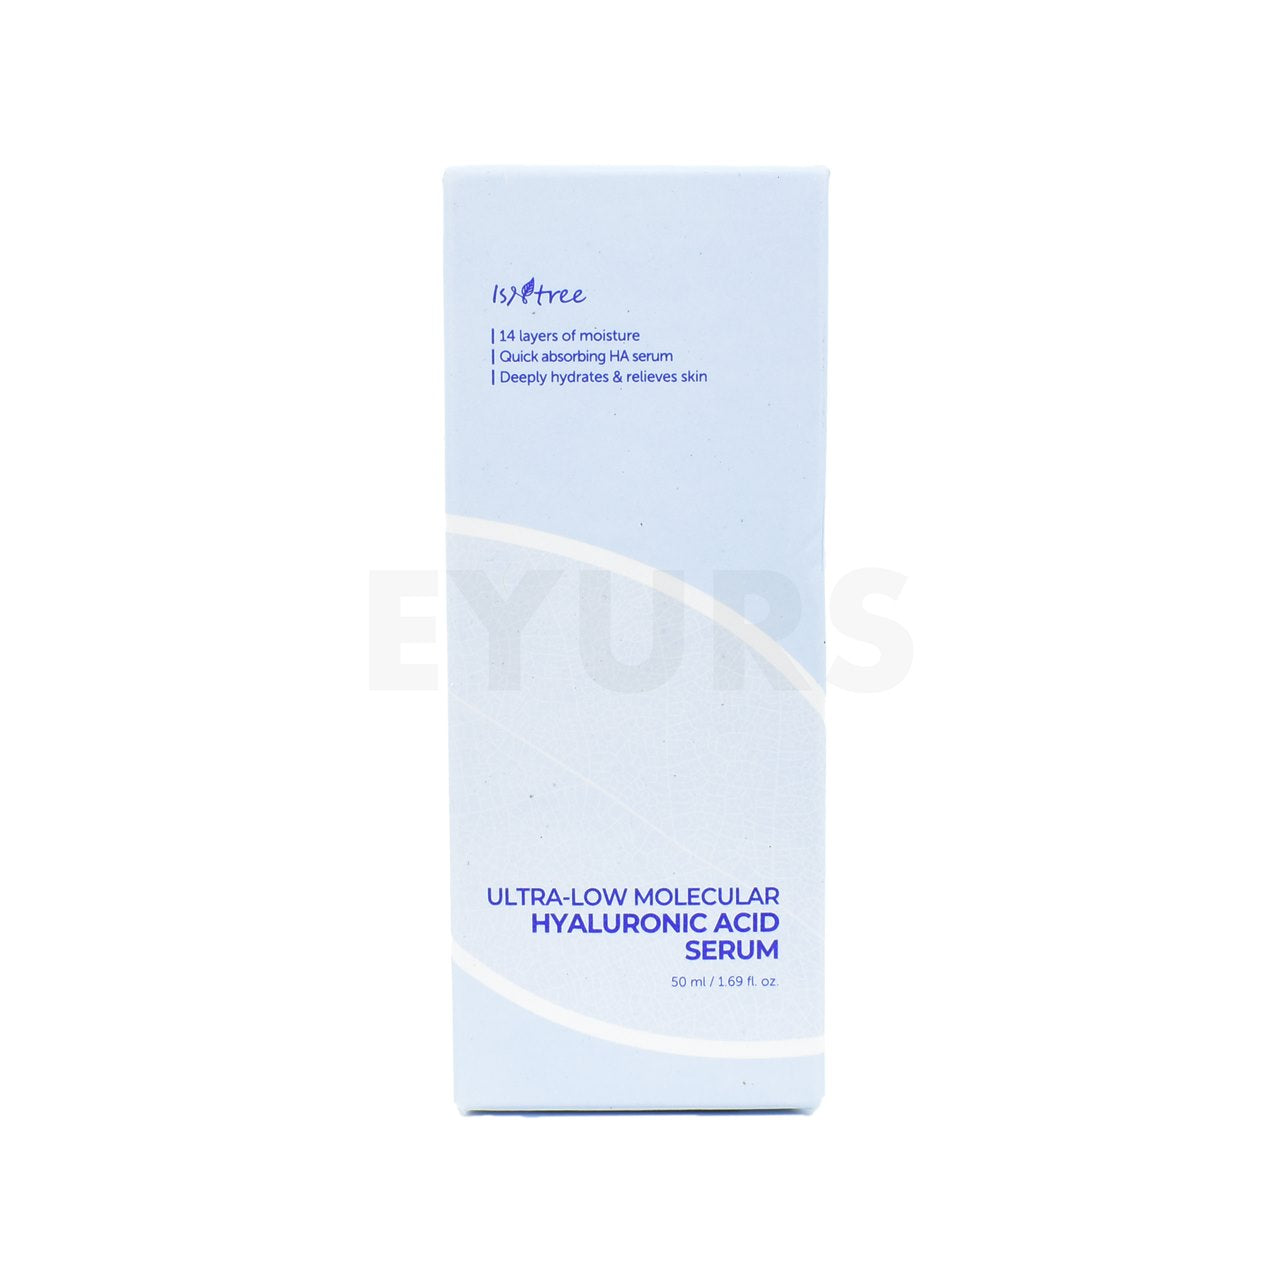  isntree ultra low molecular hyaluronic acid serum 50ml front side packaging